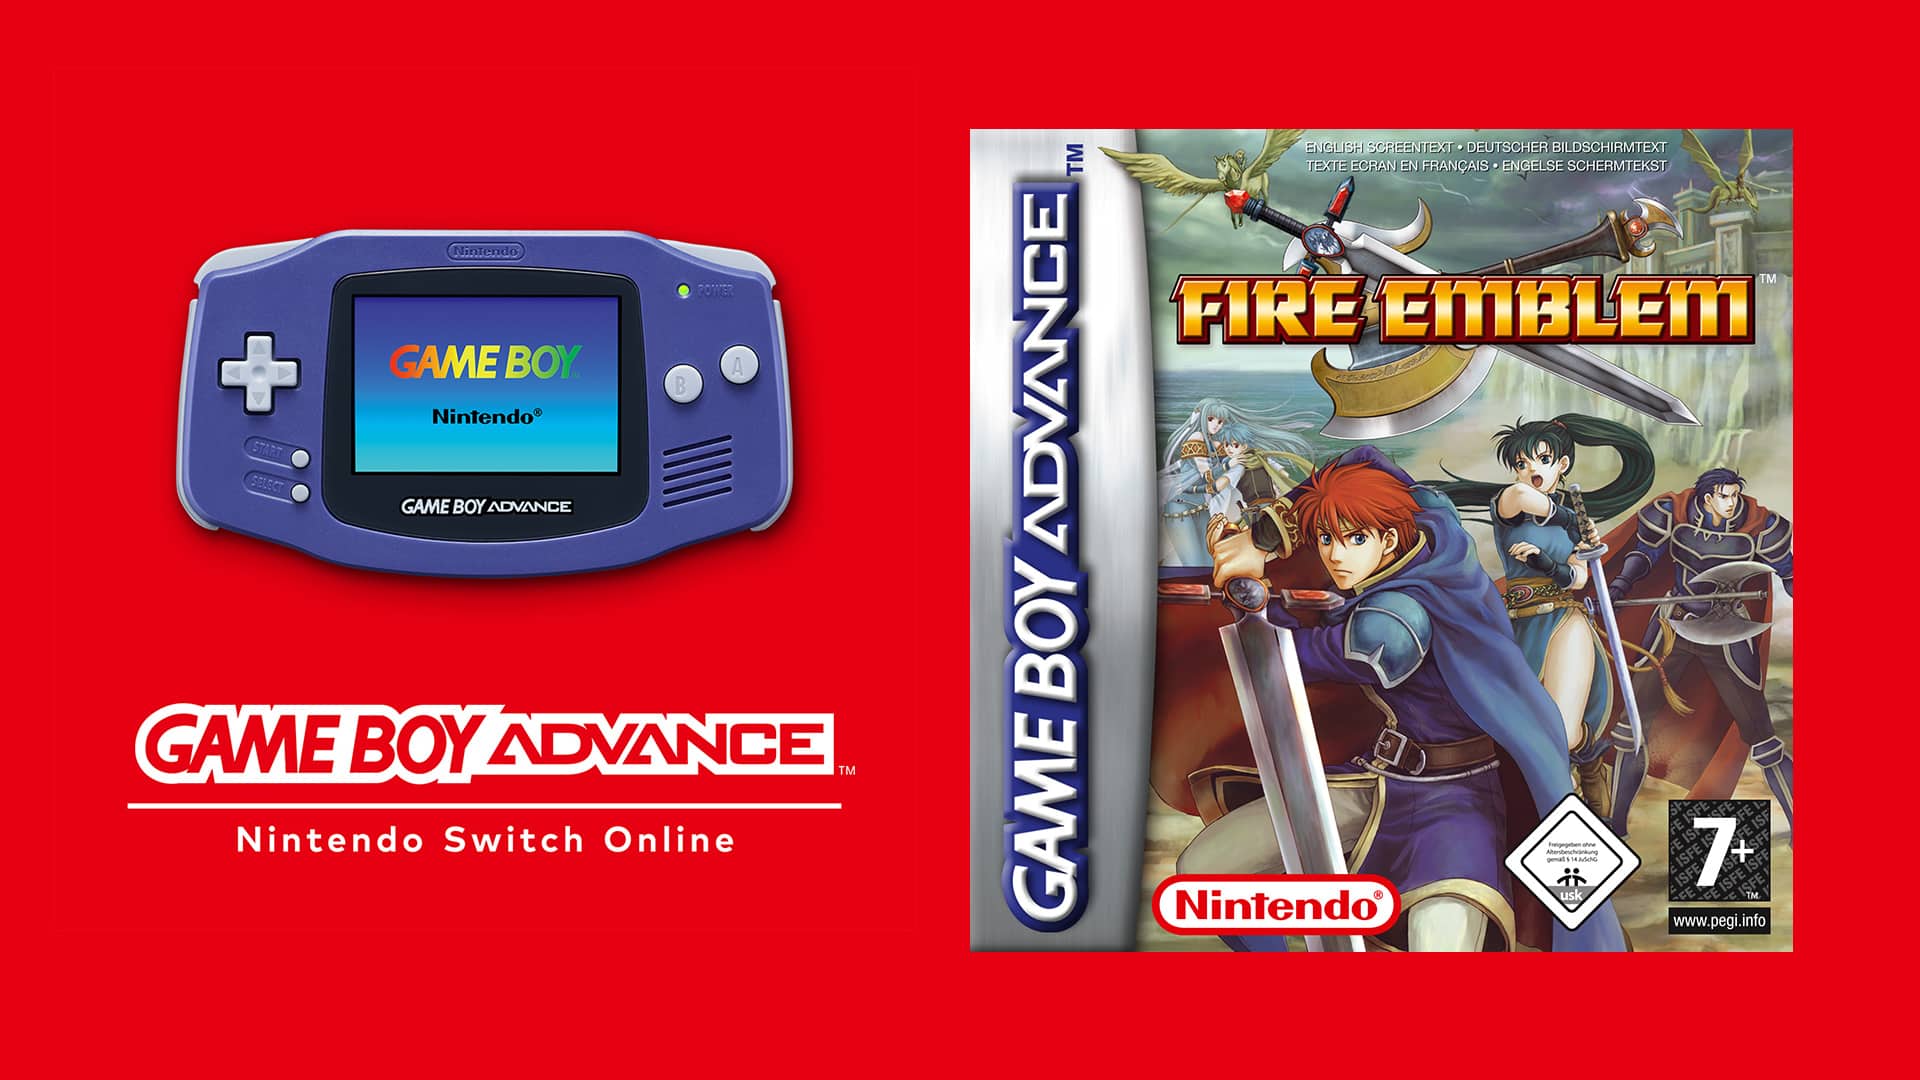 Fire Emblem arriva su Nintendo Switch Online 4